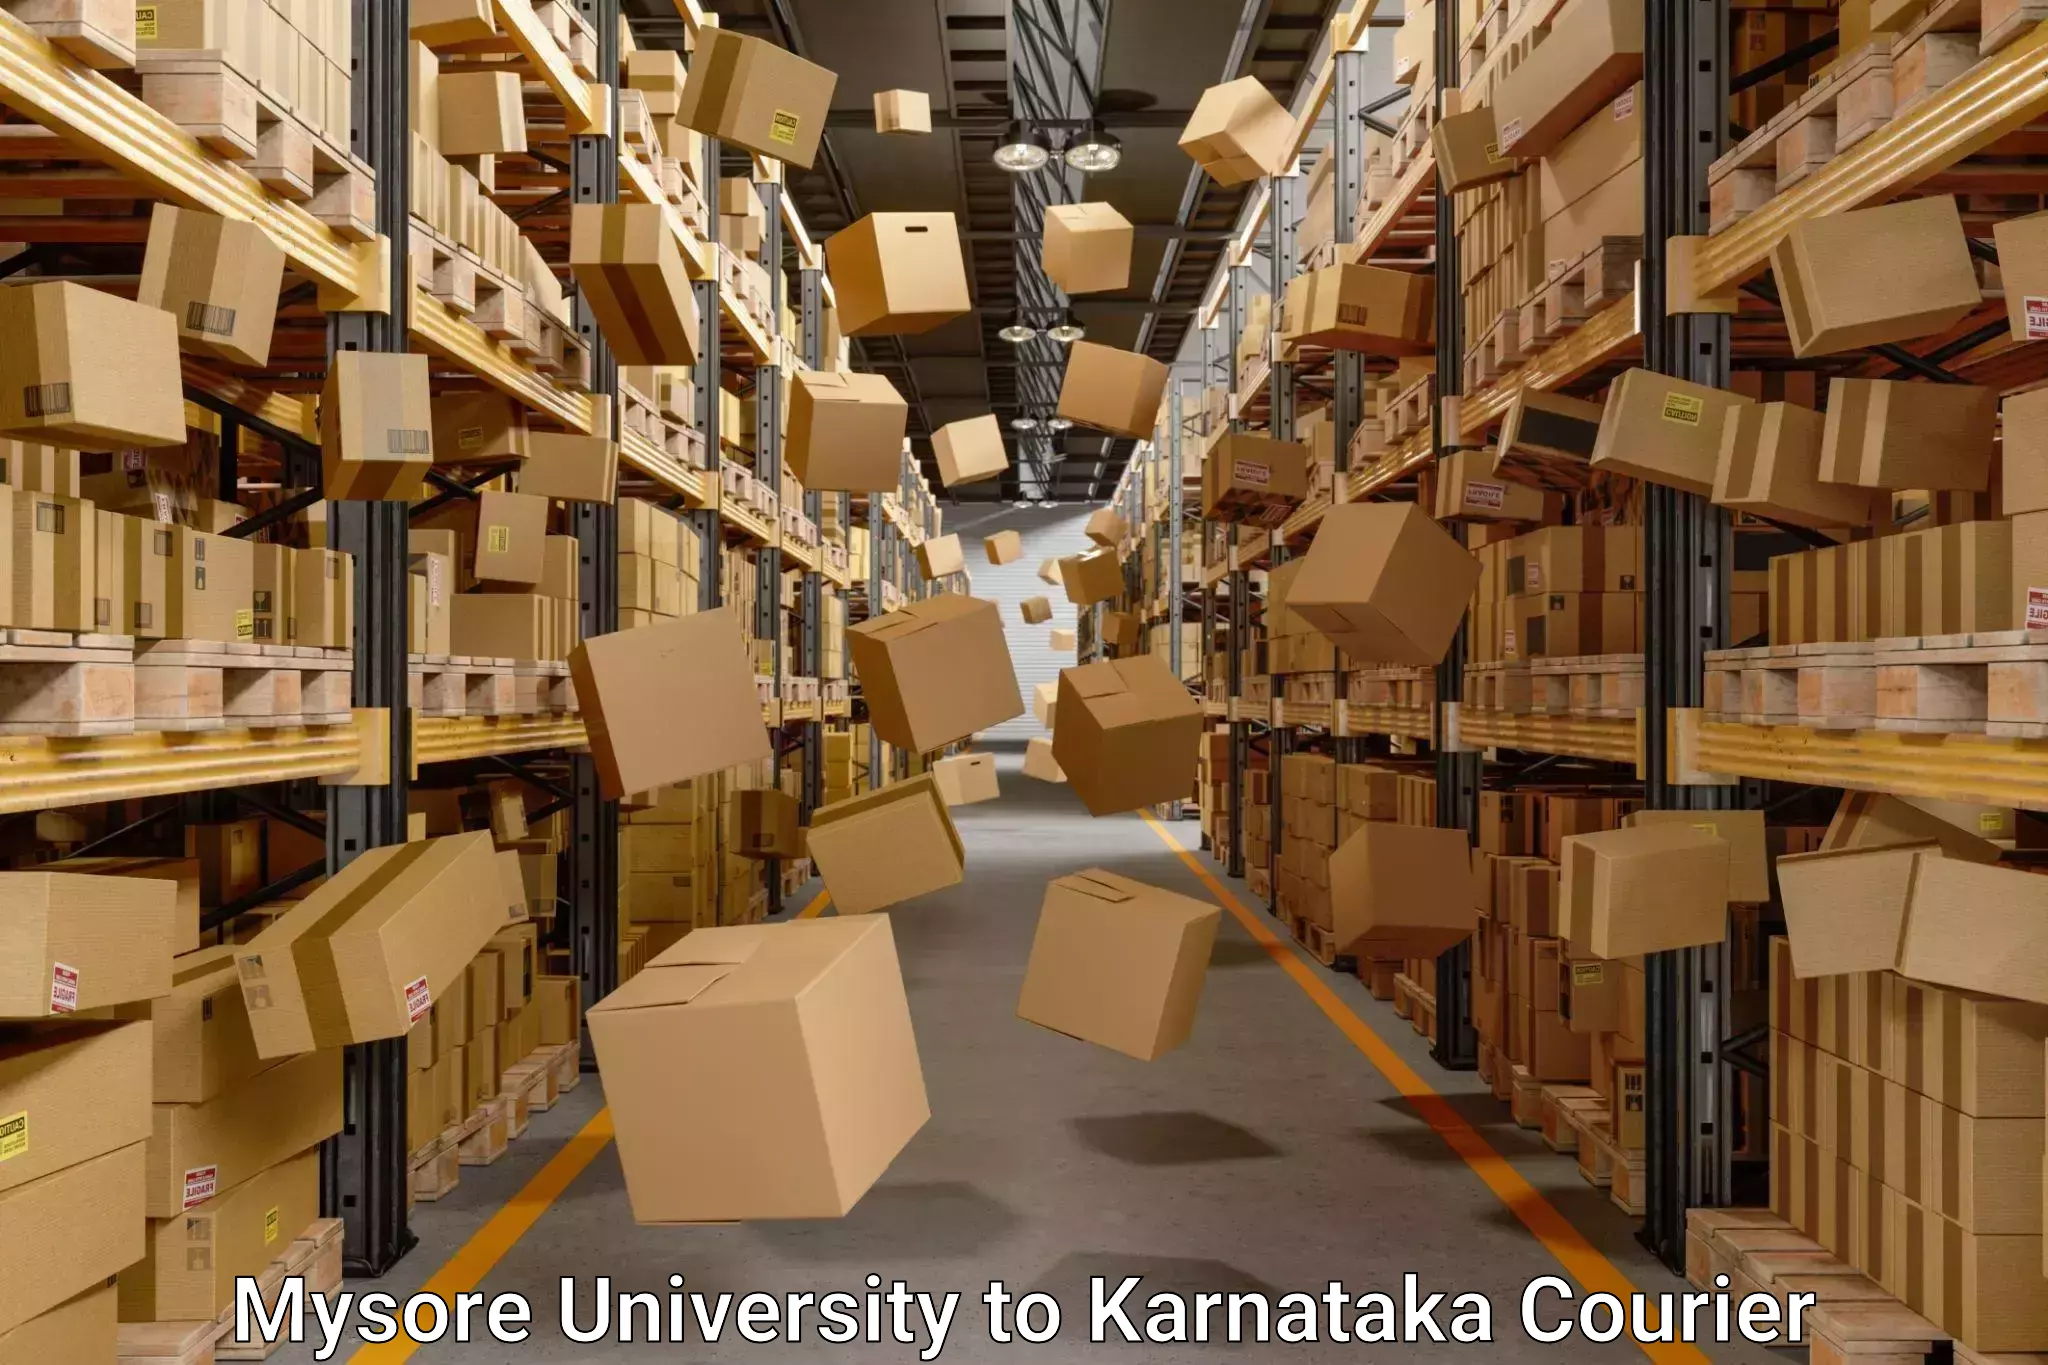 Specialized moving company Mysore University to Karnataka